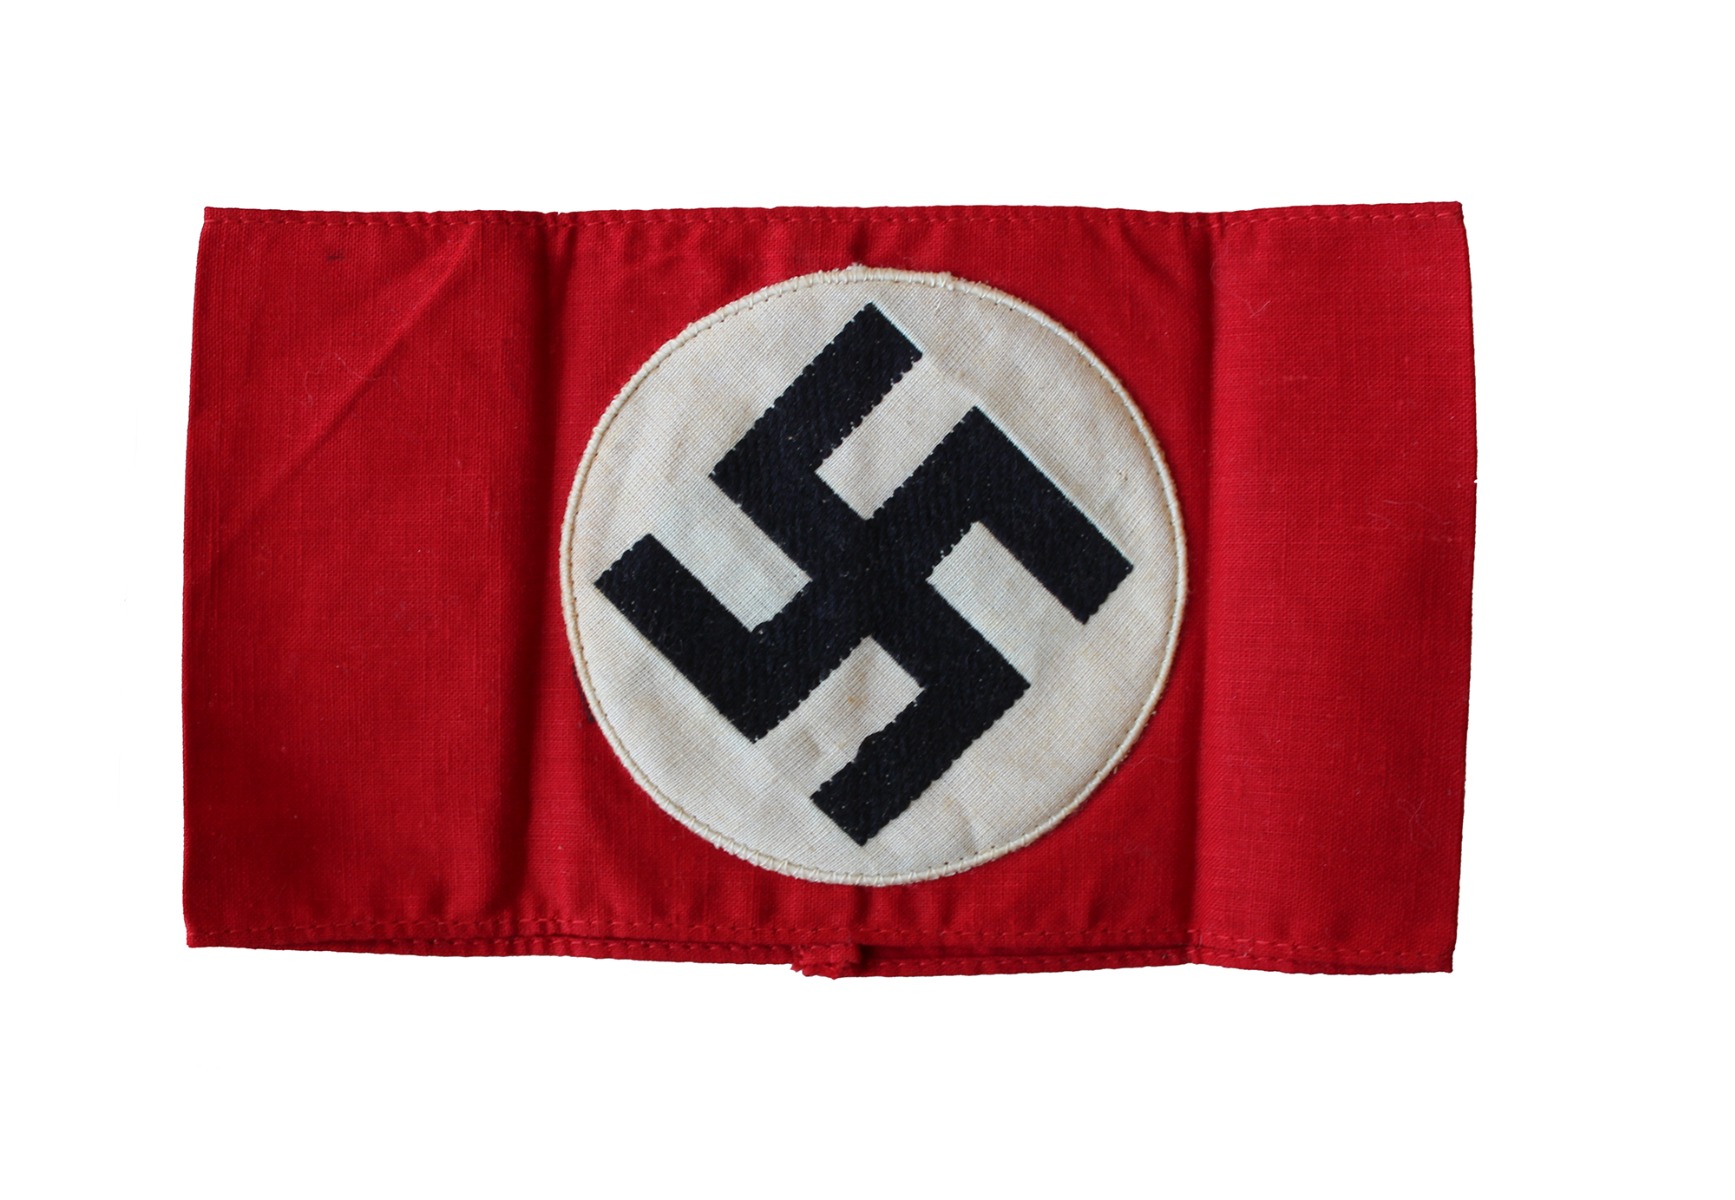  GERMAN NSDAP SA COTTON ARM BAND WITH SWASTIKA ORIGINAL